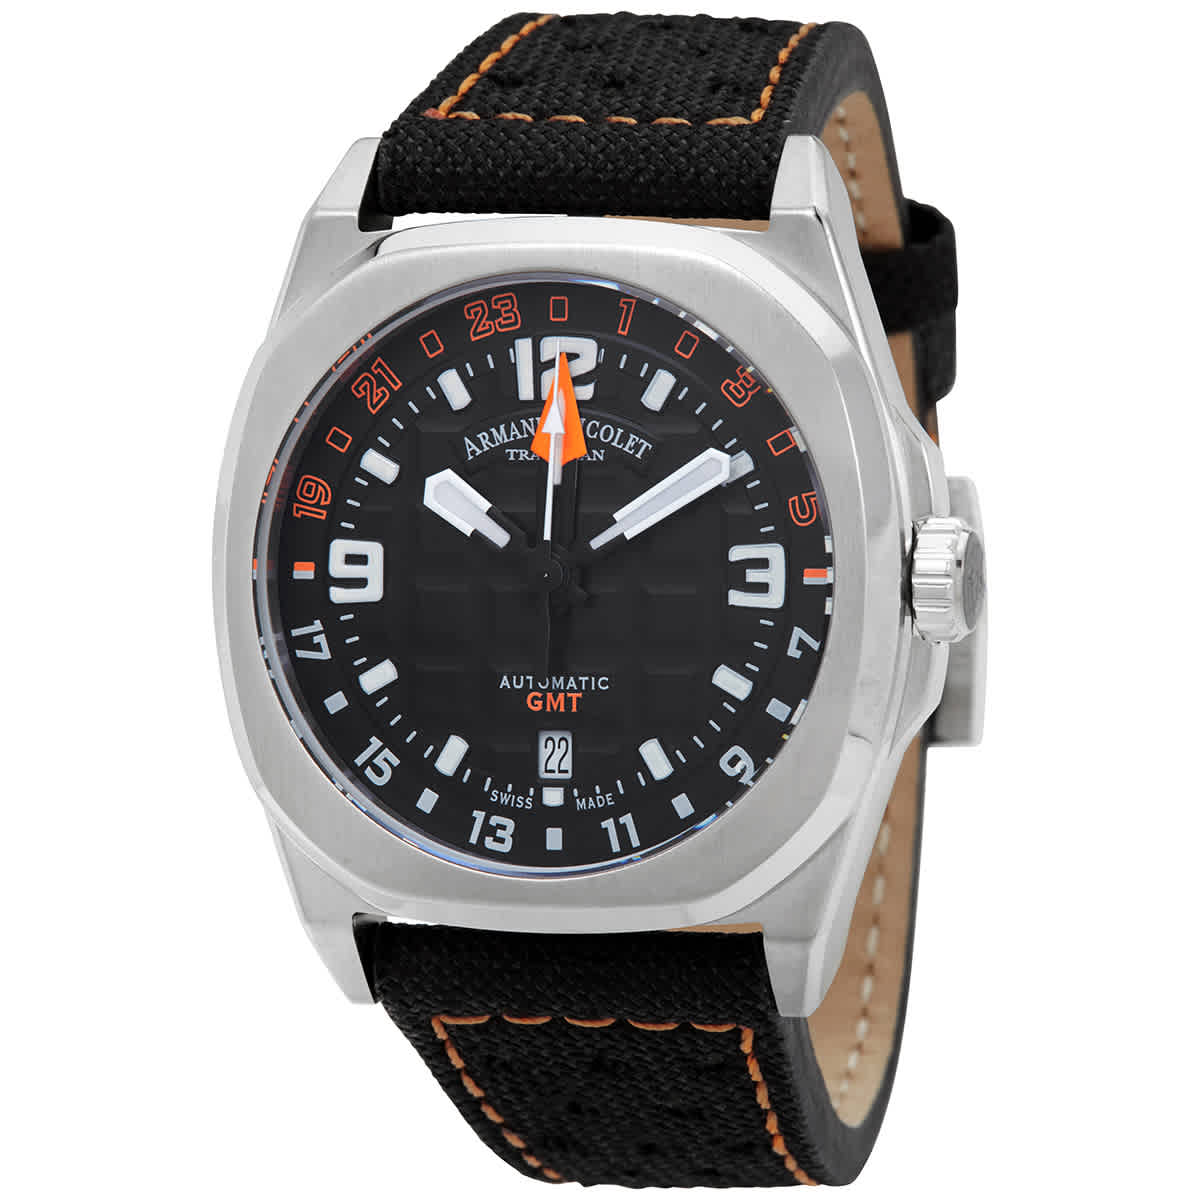 Armand Nicolet Jh9 Automatic Black Dial Mens Watch A663haa-no-p0668no8 In Black,orange,silver Tone